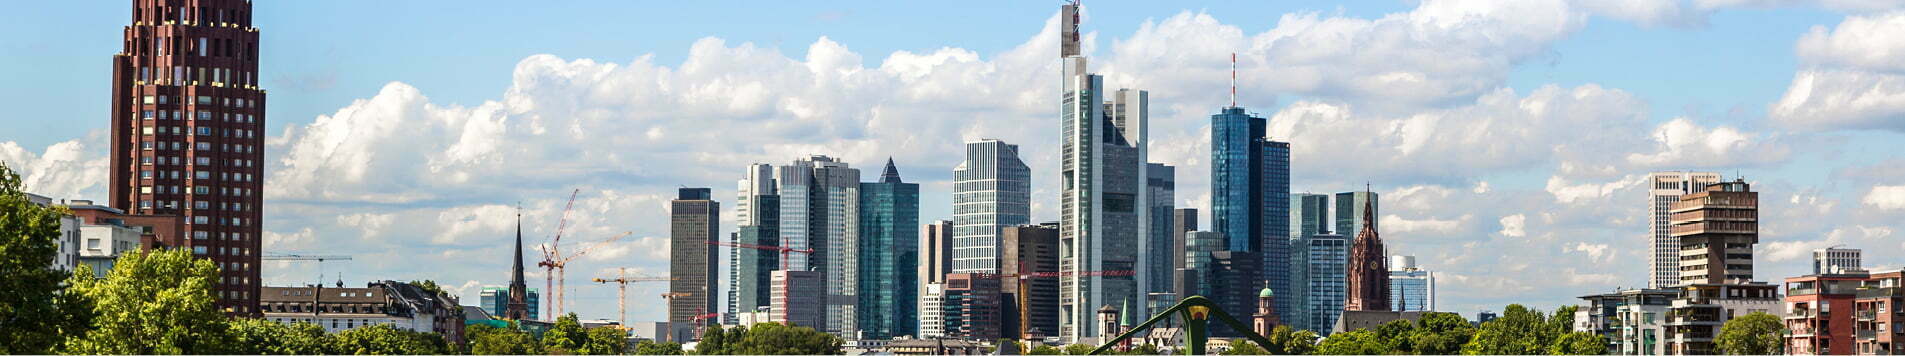 Investor Roadshows, European Investor Access z cometis AG, Frankfurt City - Niemcy.